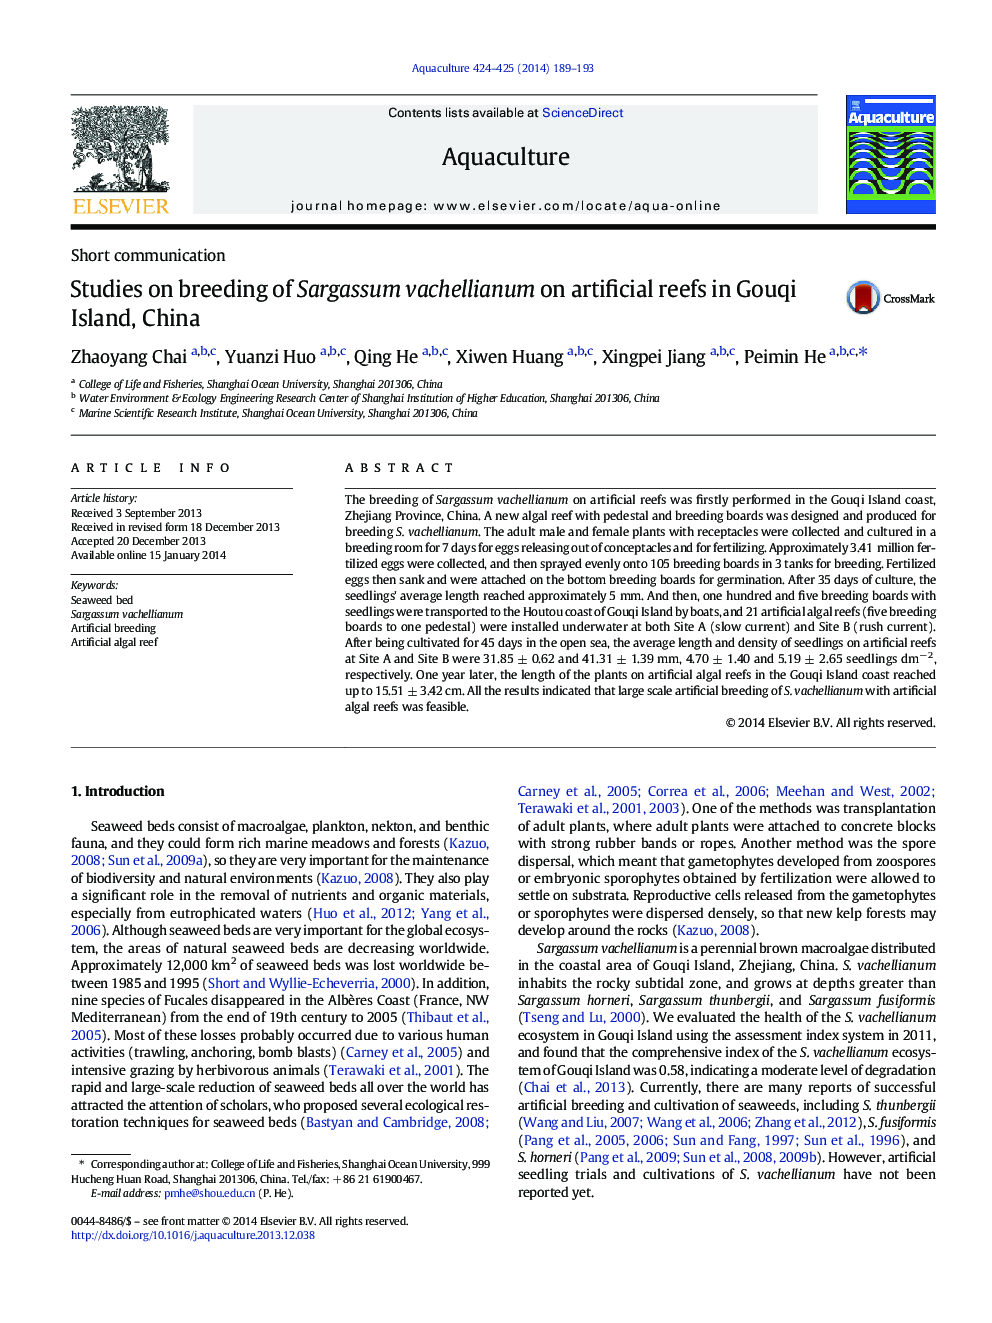 Studies on breeding of Sargassum vachellianum on artificial reefs in Gouqi Island, China